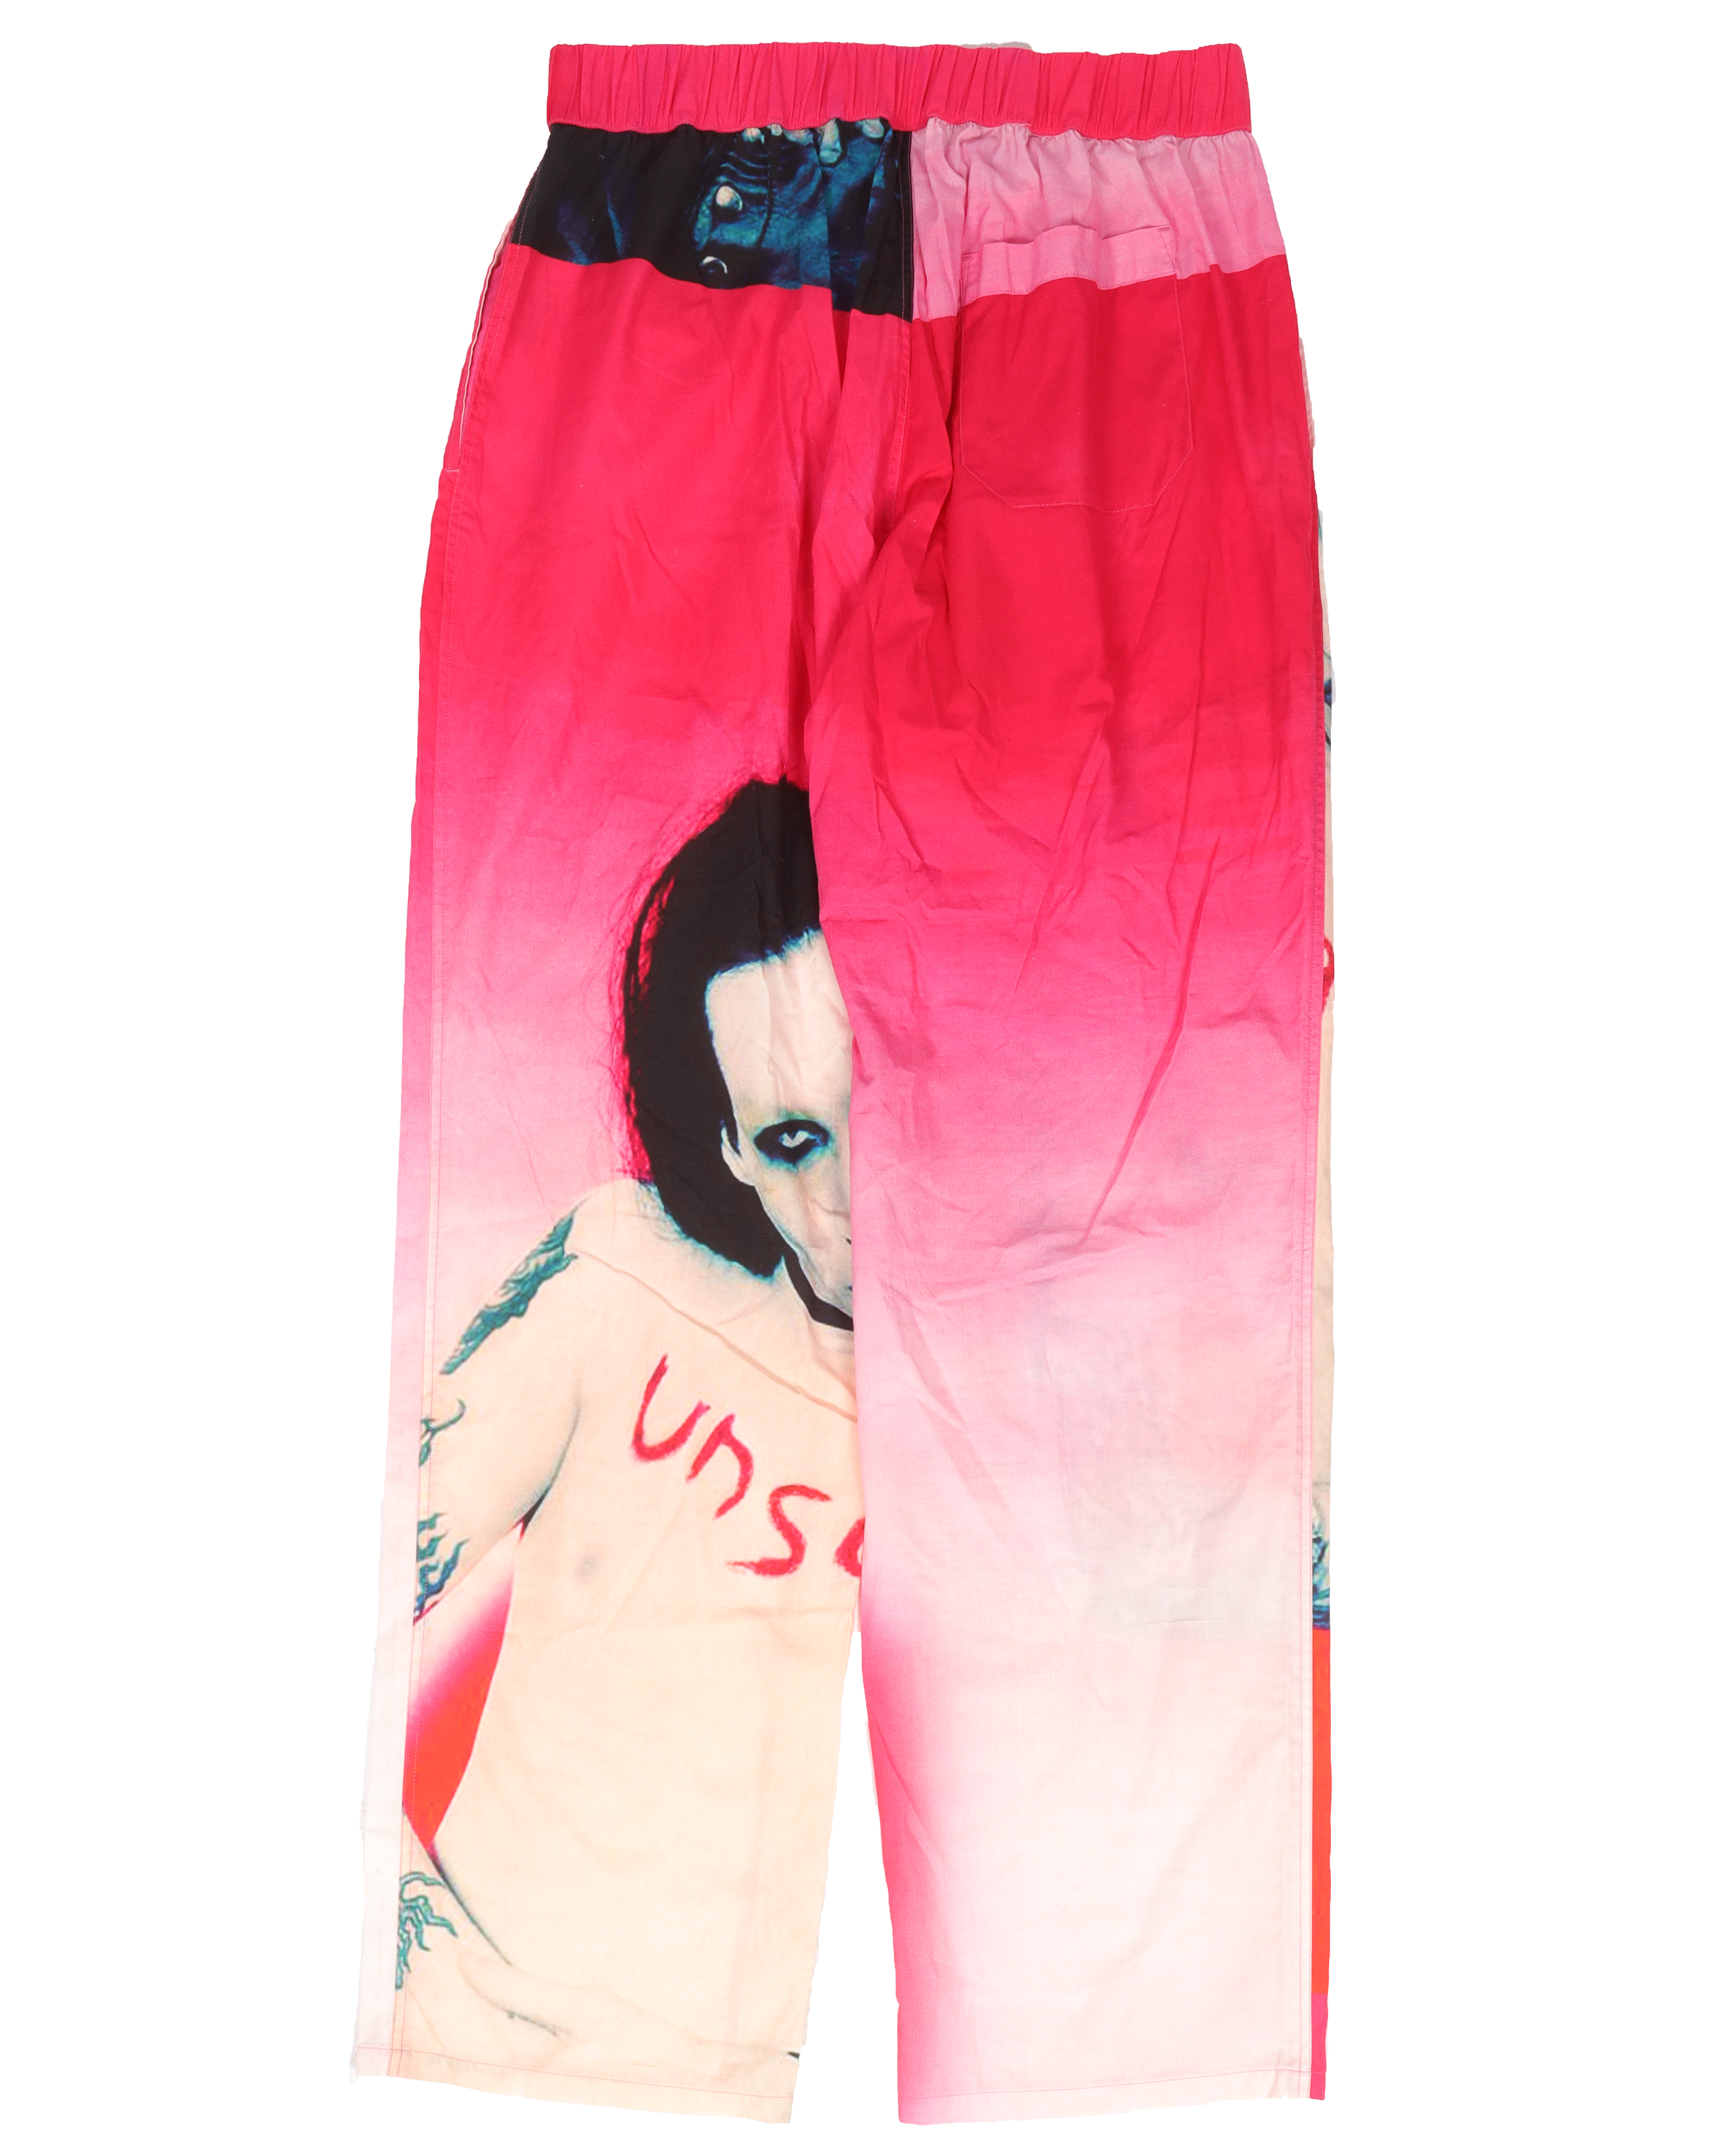 AW19 Marilyn Manson Pants